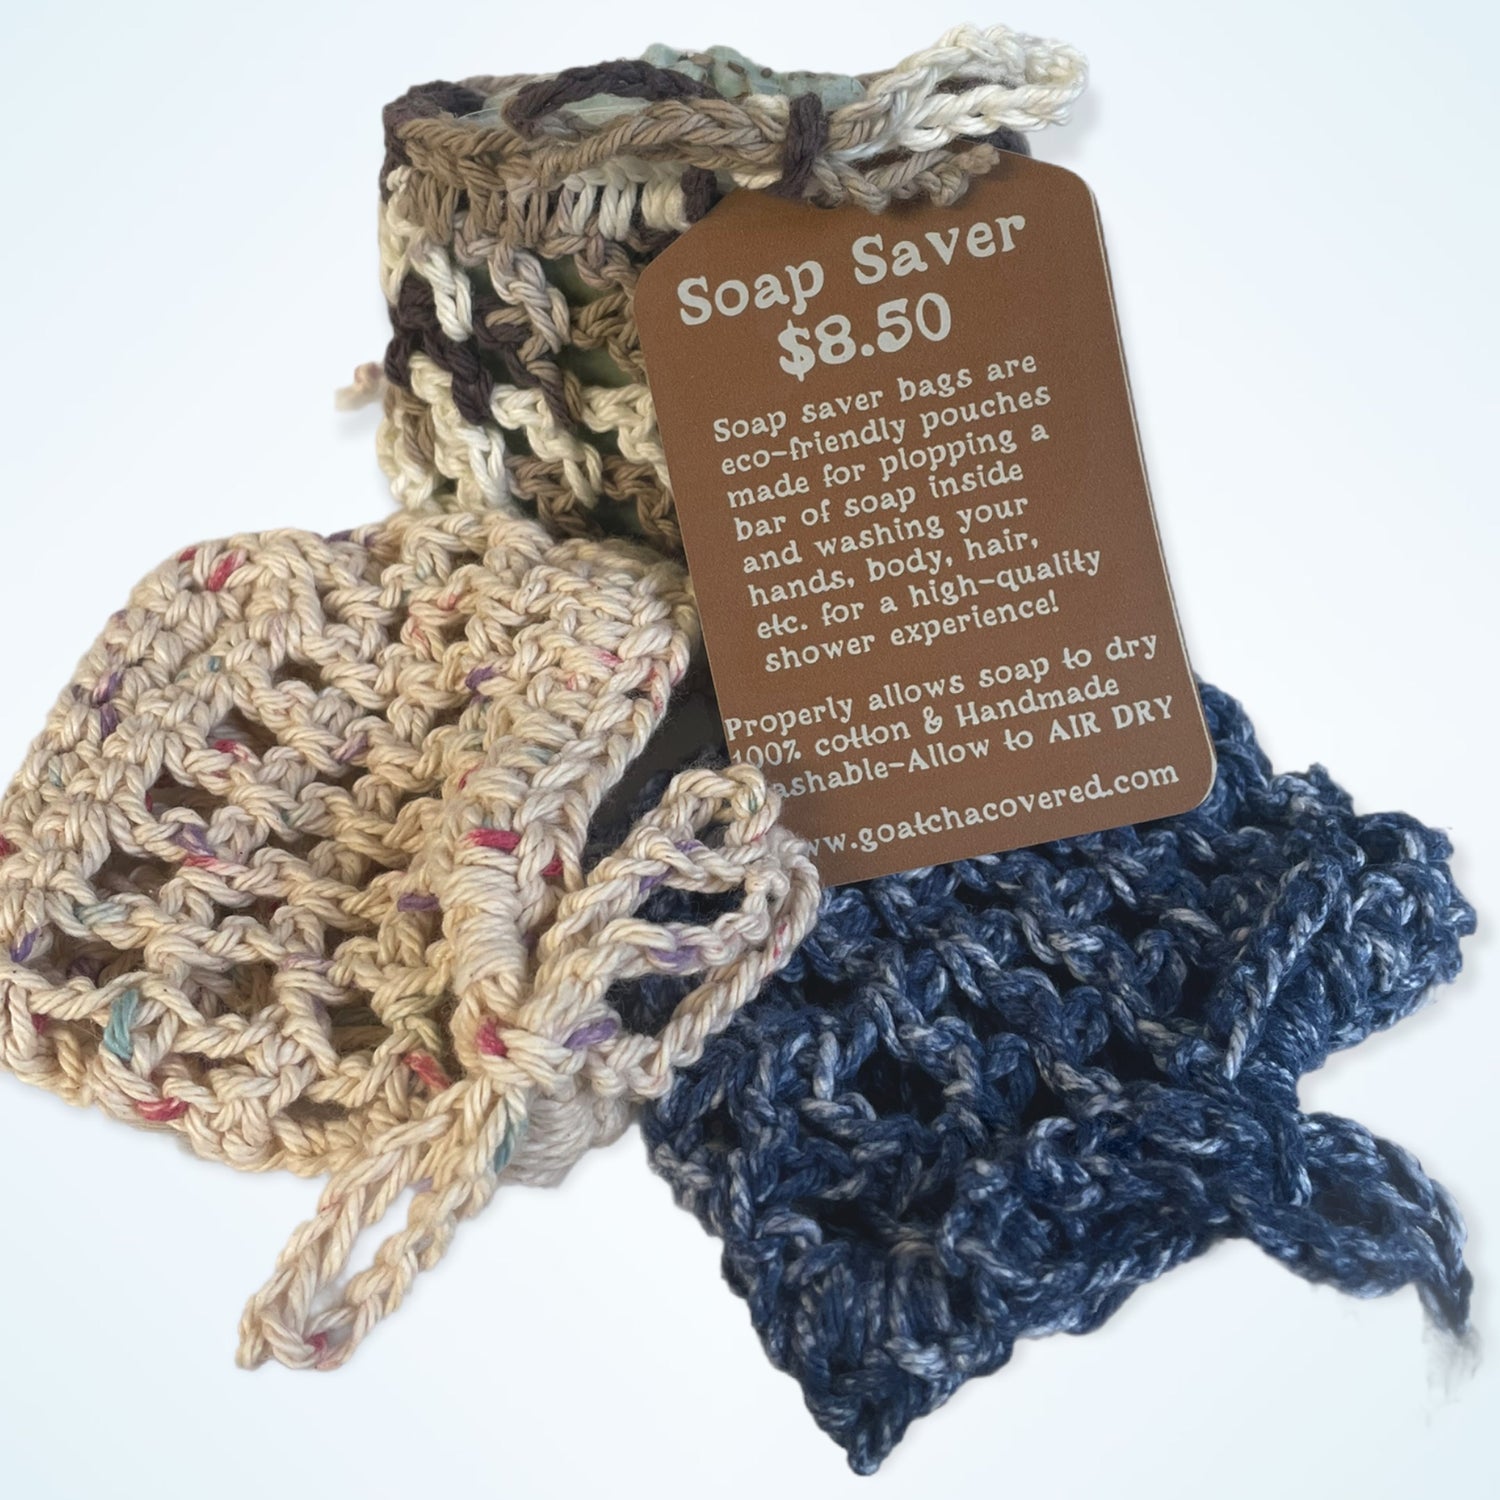 Crochet Items